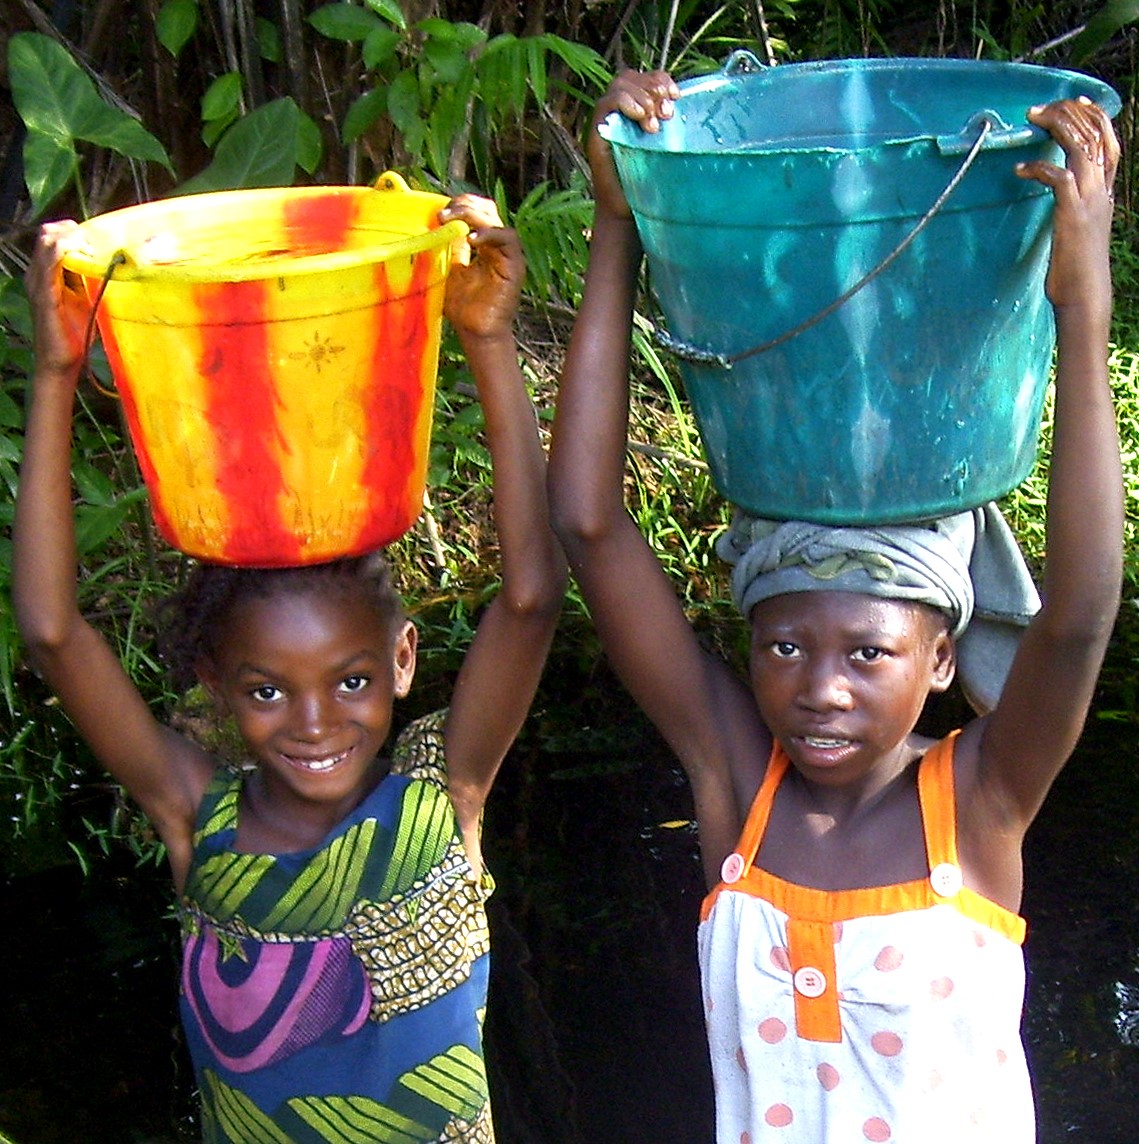 Girls + buckets in Liberia.jpg 408 KB